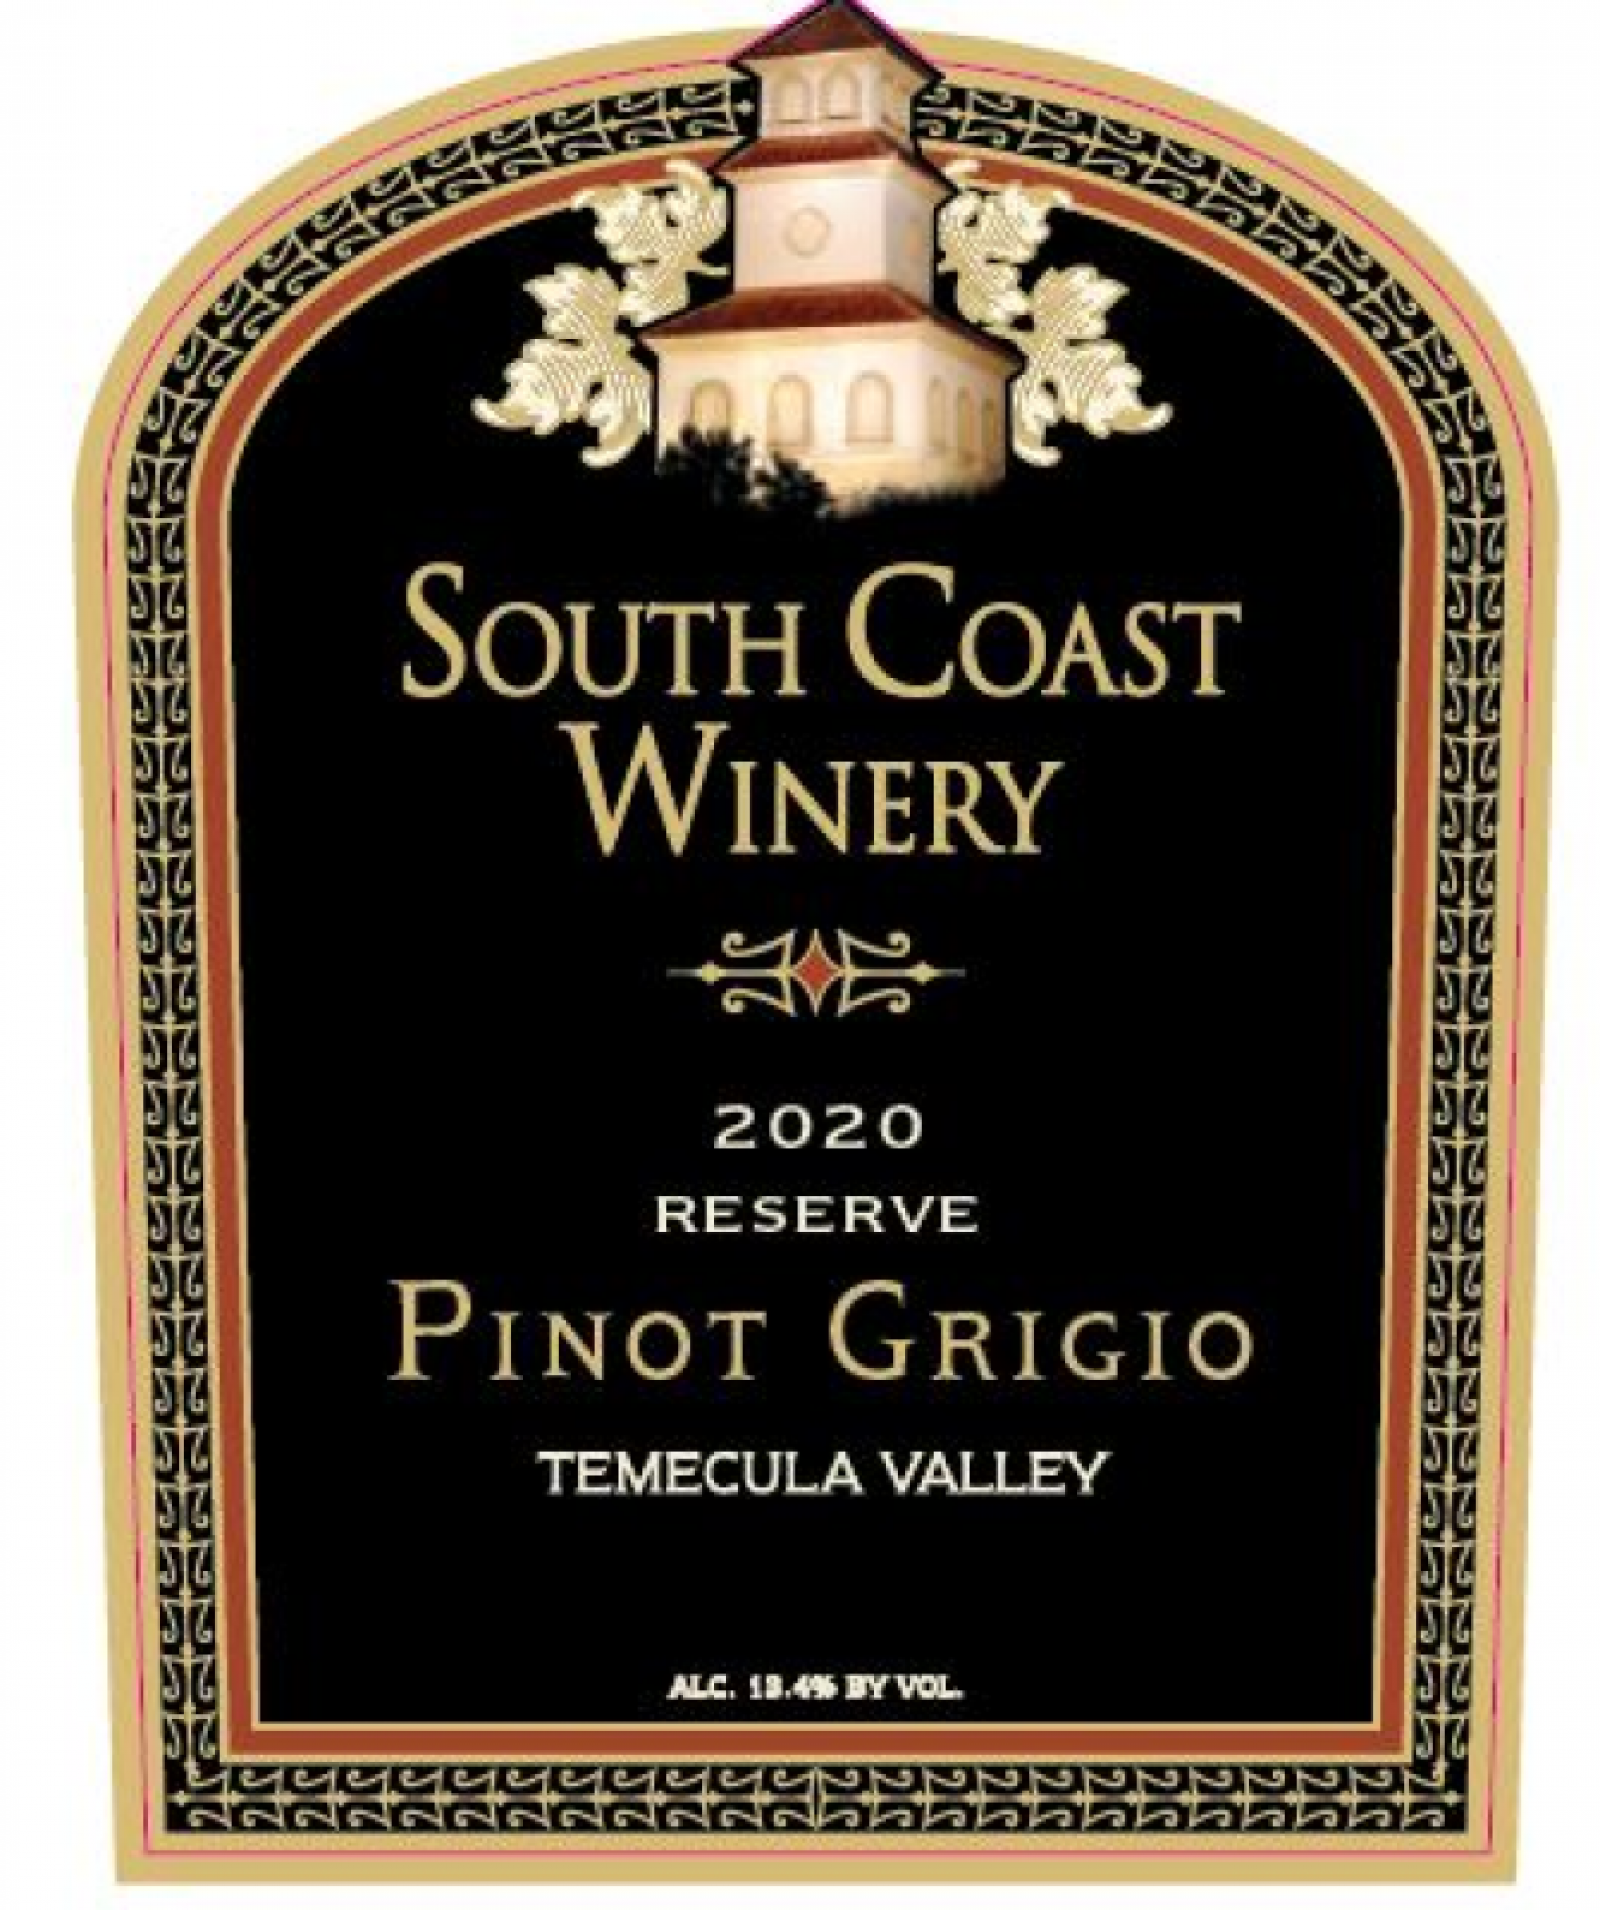 South Coast Pinot Grigio Reserve 2020